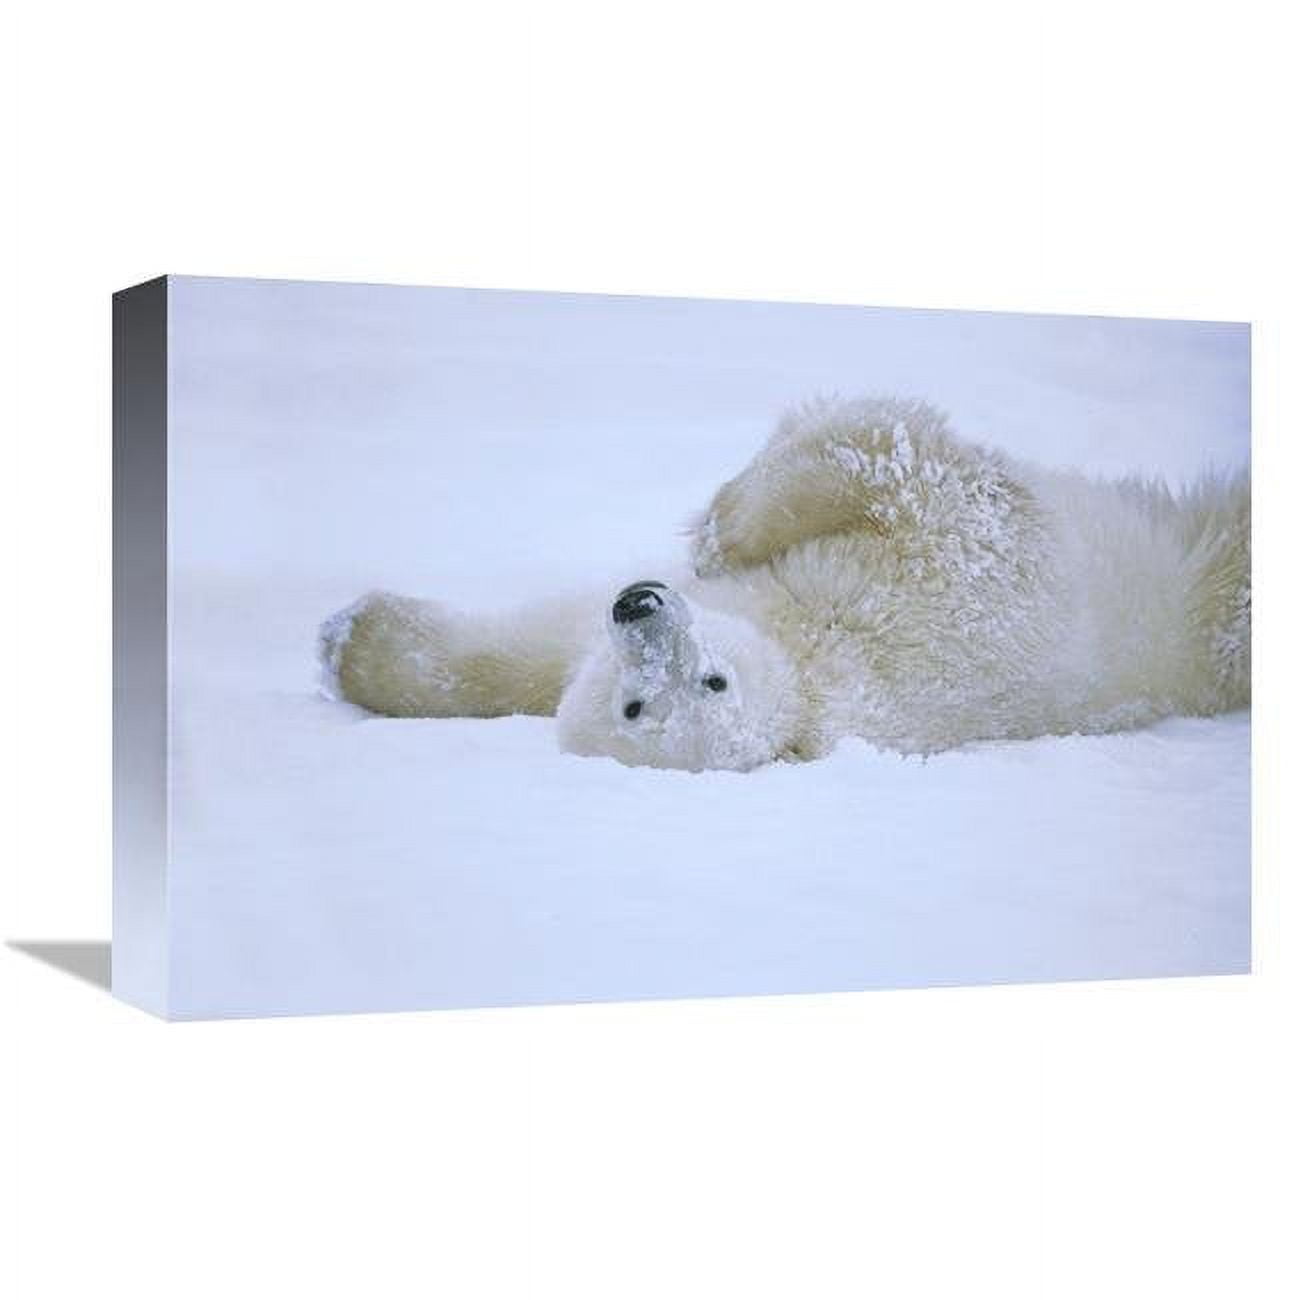 Global Gallery GCS-452509-1218-142 12 x 18 in. Polar Bear Rolling in Snow, Hudson Bay, Canada Art Print - Konrad Wothe